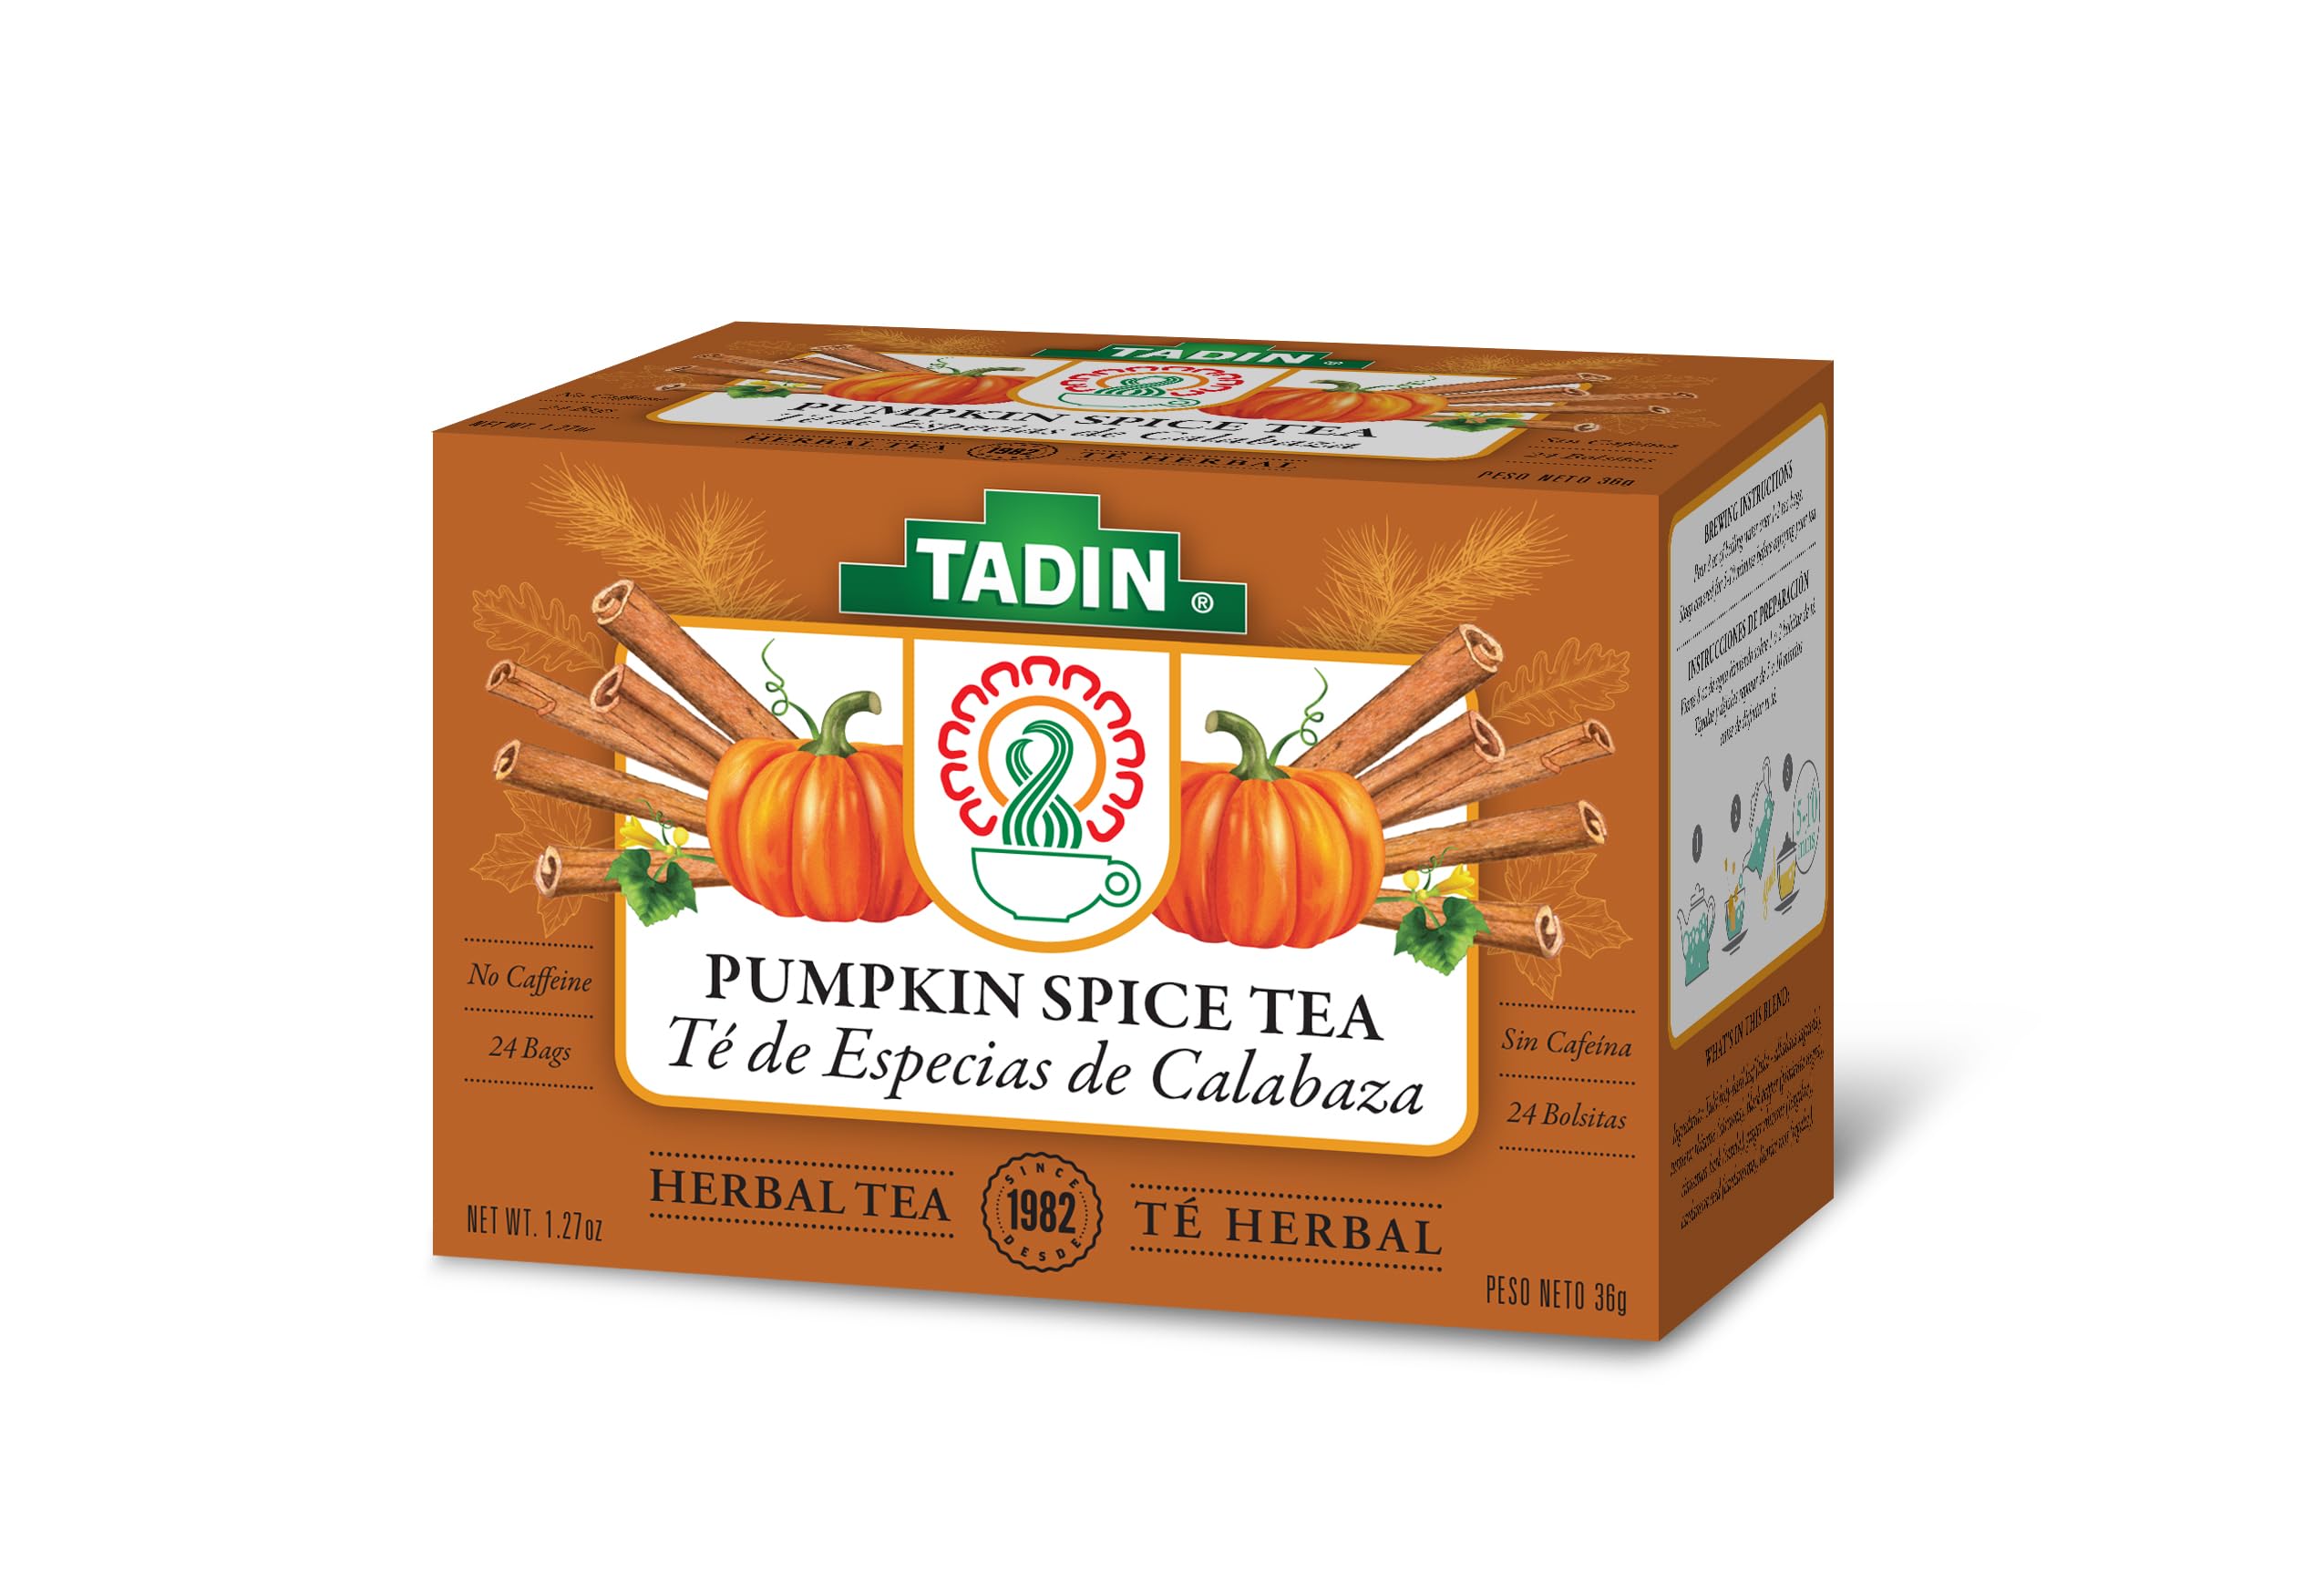 144-Count TADIN Caffeine Free Tea Bags (Pumpkin Spice Tea) $9.70 + Free Shipping w/ Prime or on $35+